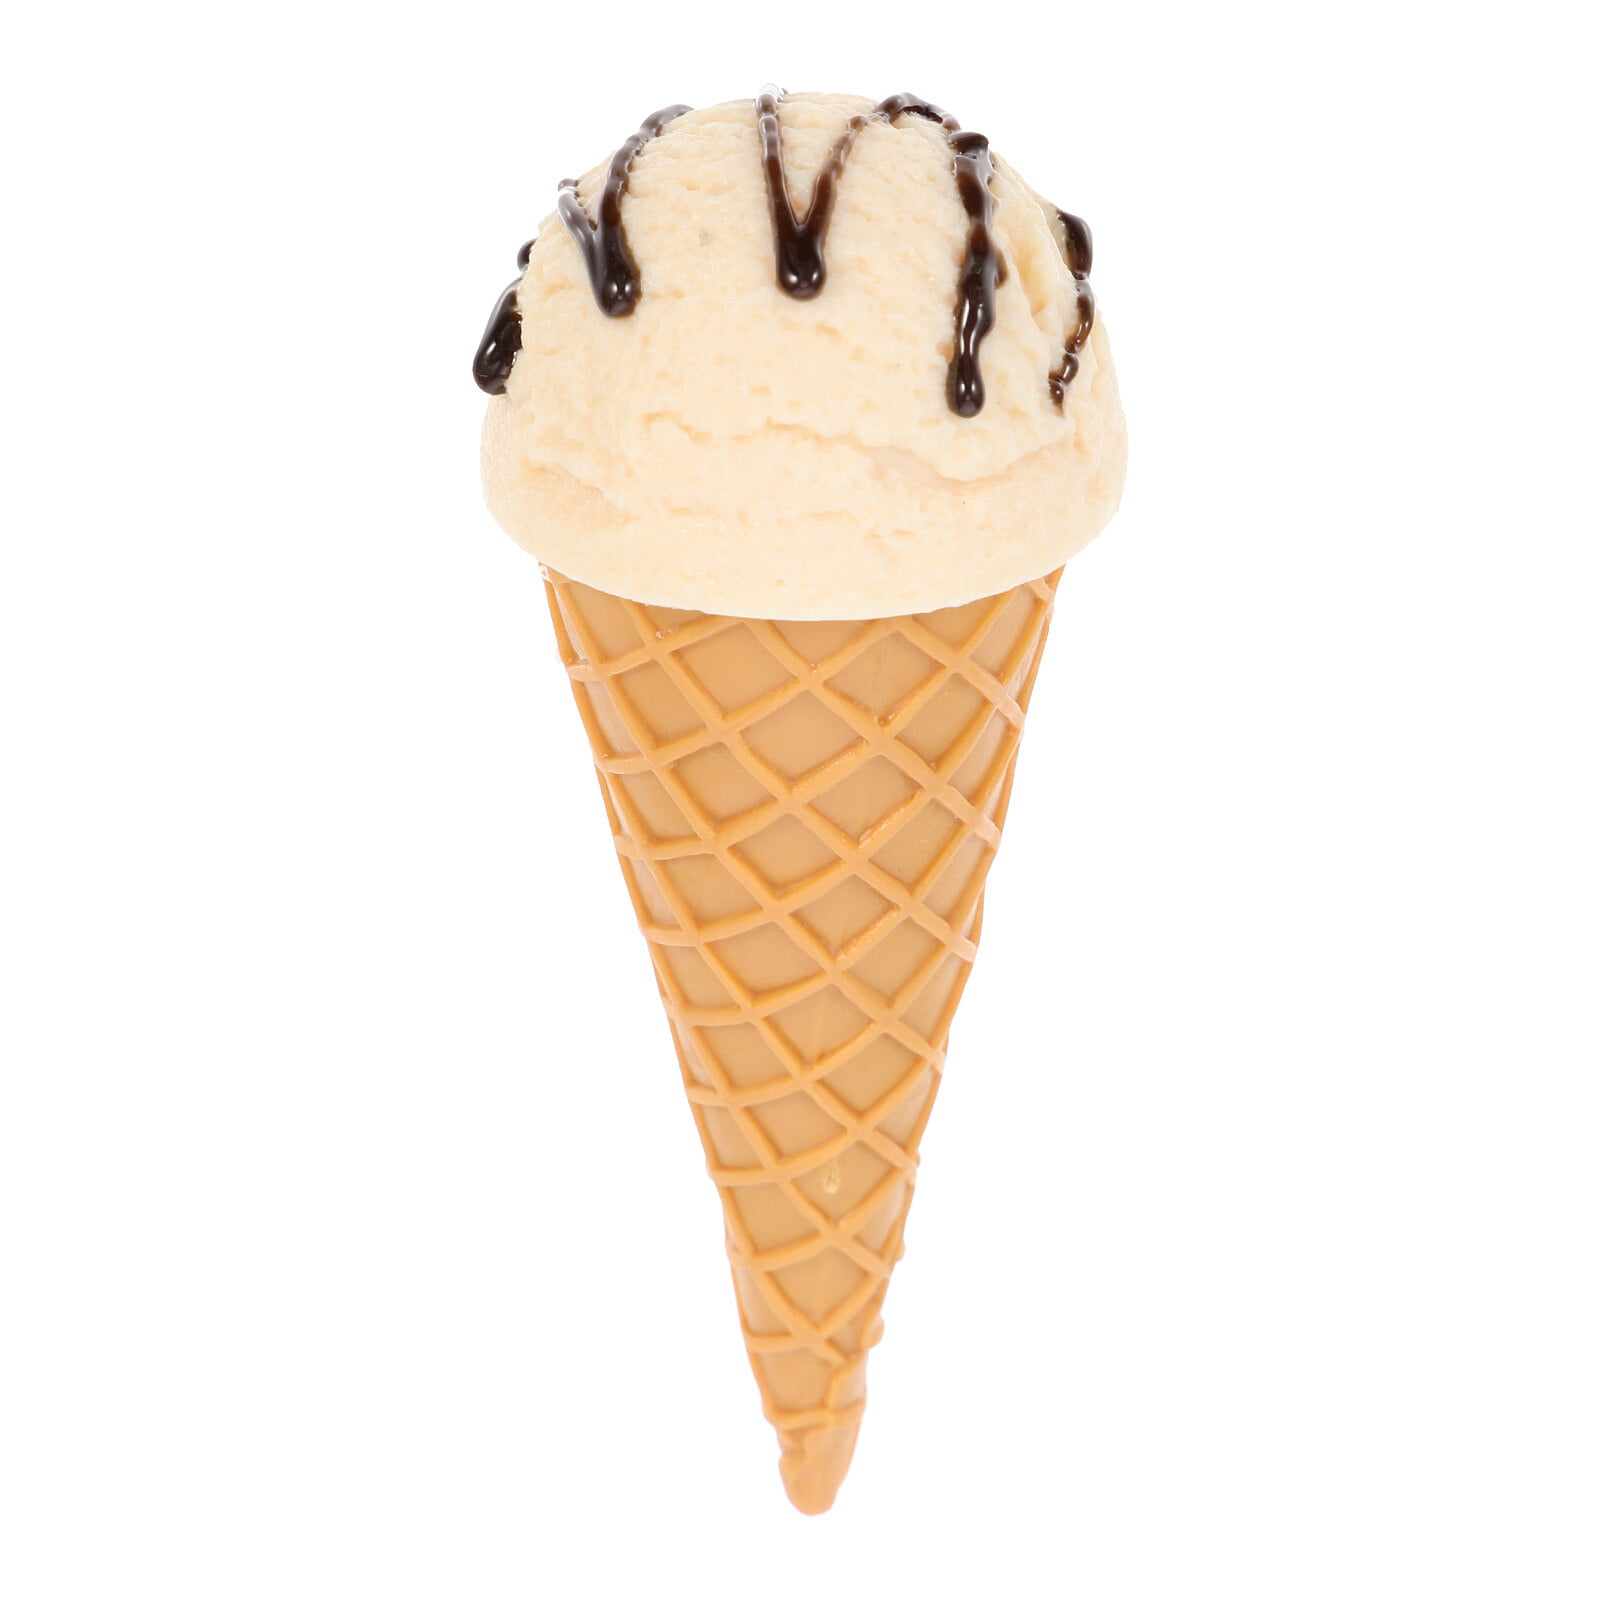  Fake Ice Cream Double Scoop Vanilla on Sugar Cone Faux Food  Photo Prop Decor : Handmade Products